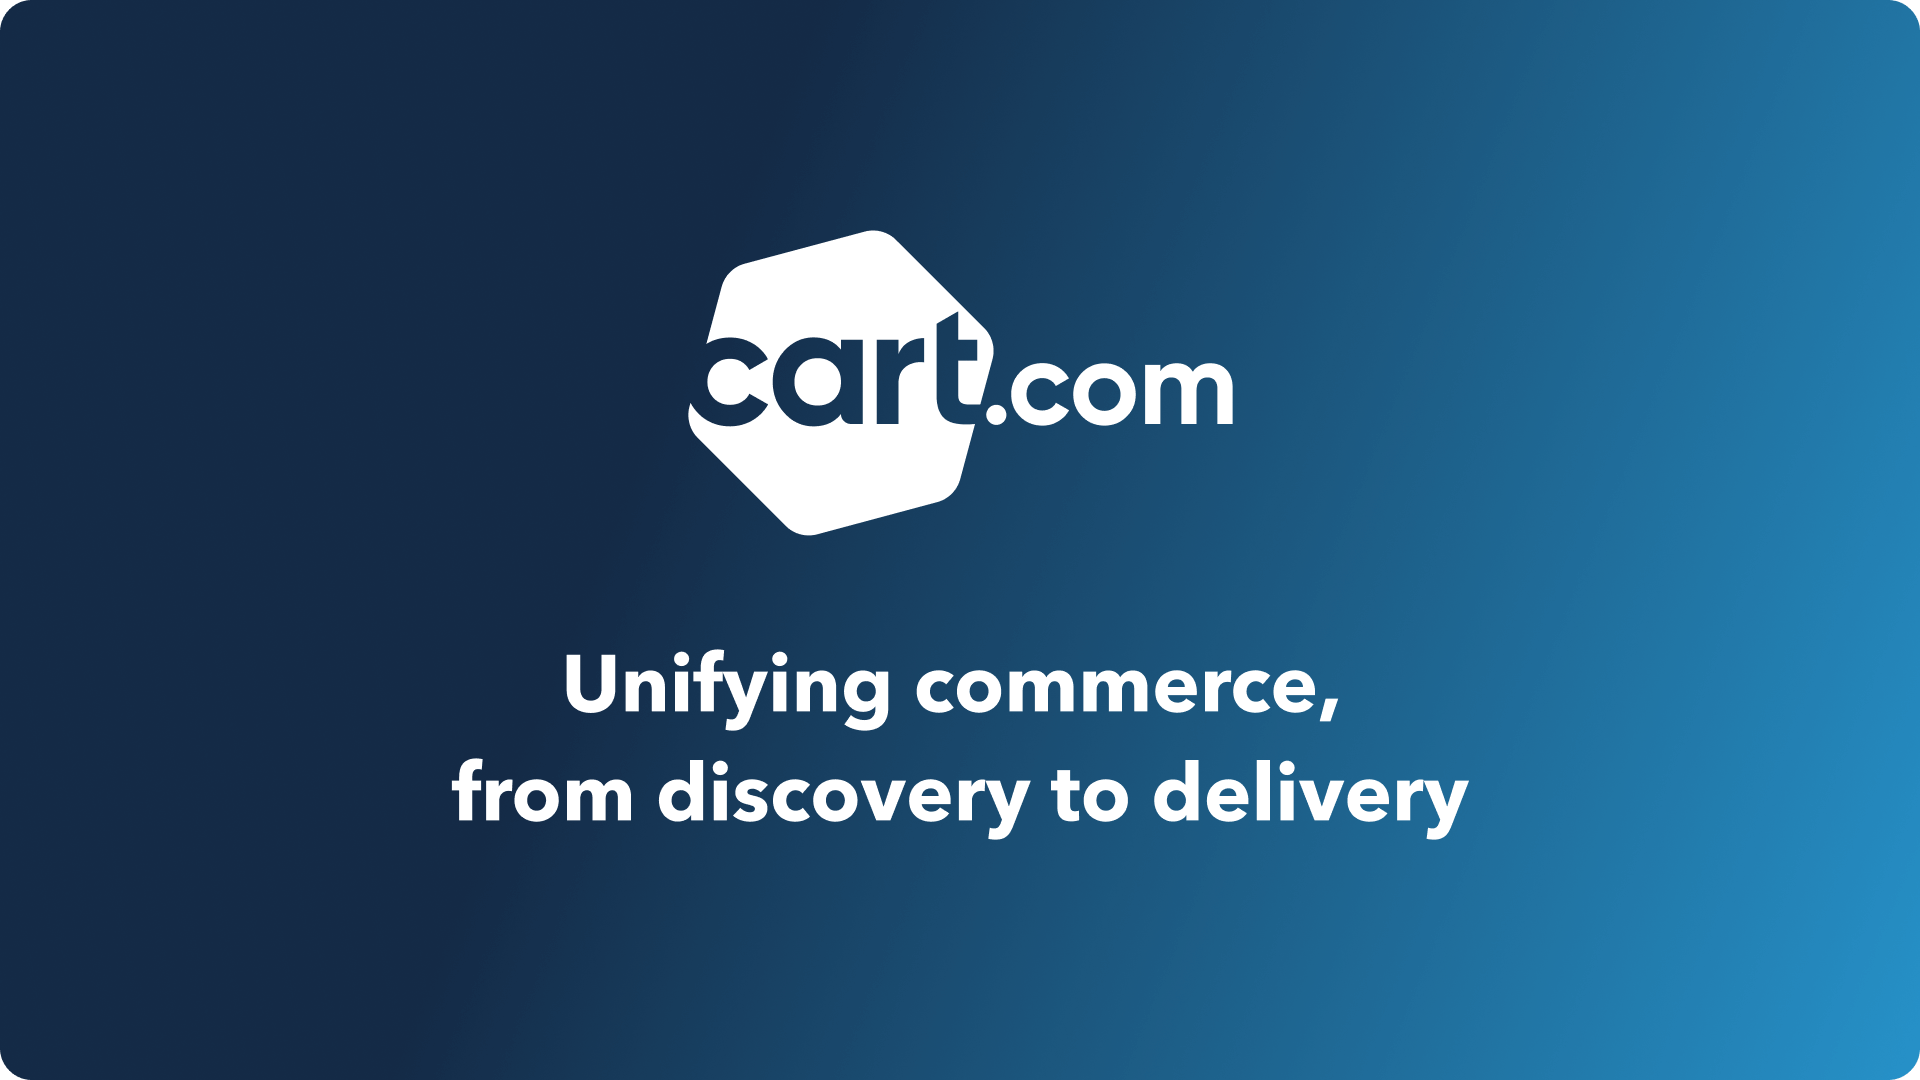 (c) Cart.com